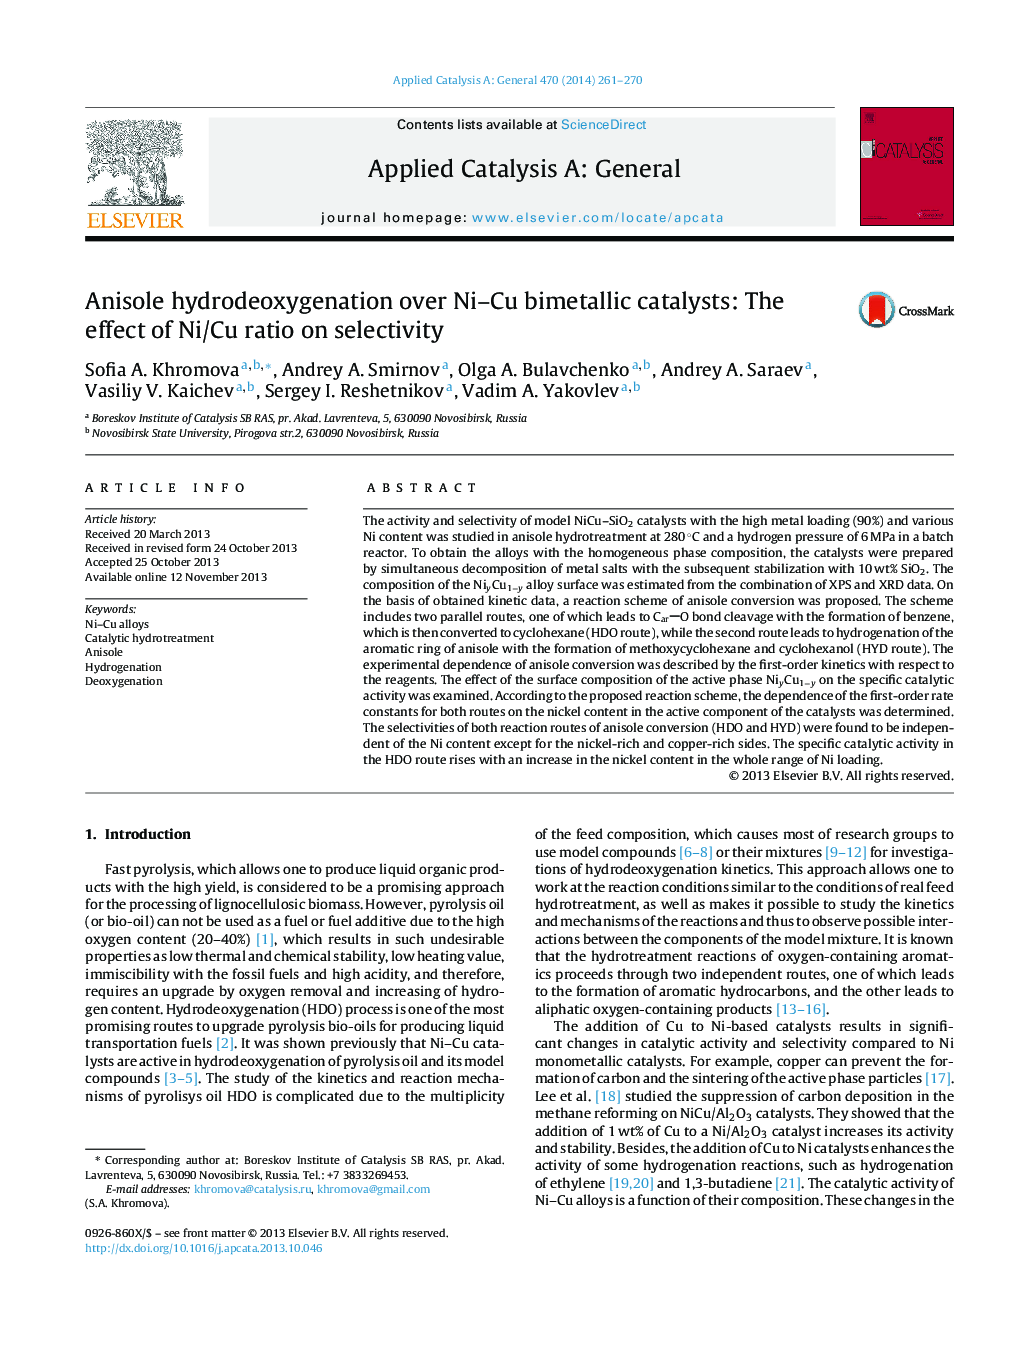 Anisole hydrodeoxygenation over Ni–Cu bimetallic catalysts: The effect of Ni/Cu ratio on selectivity